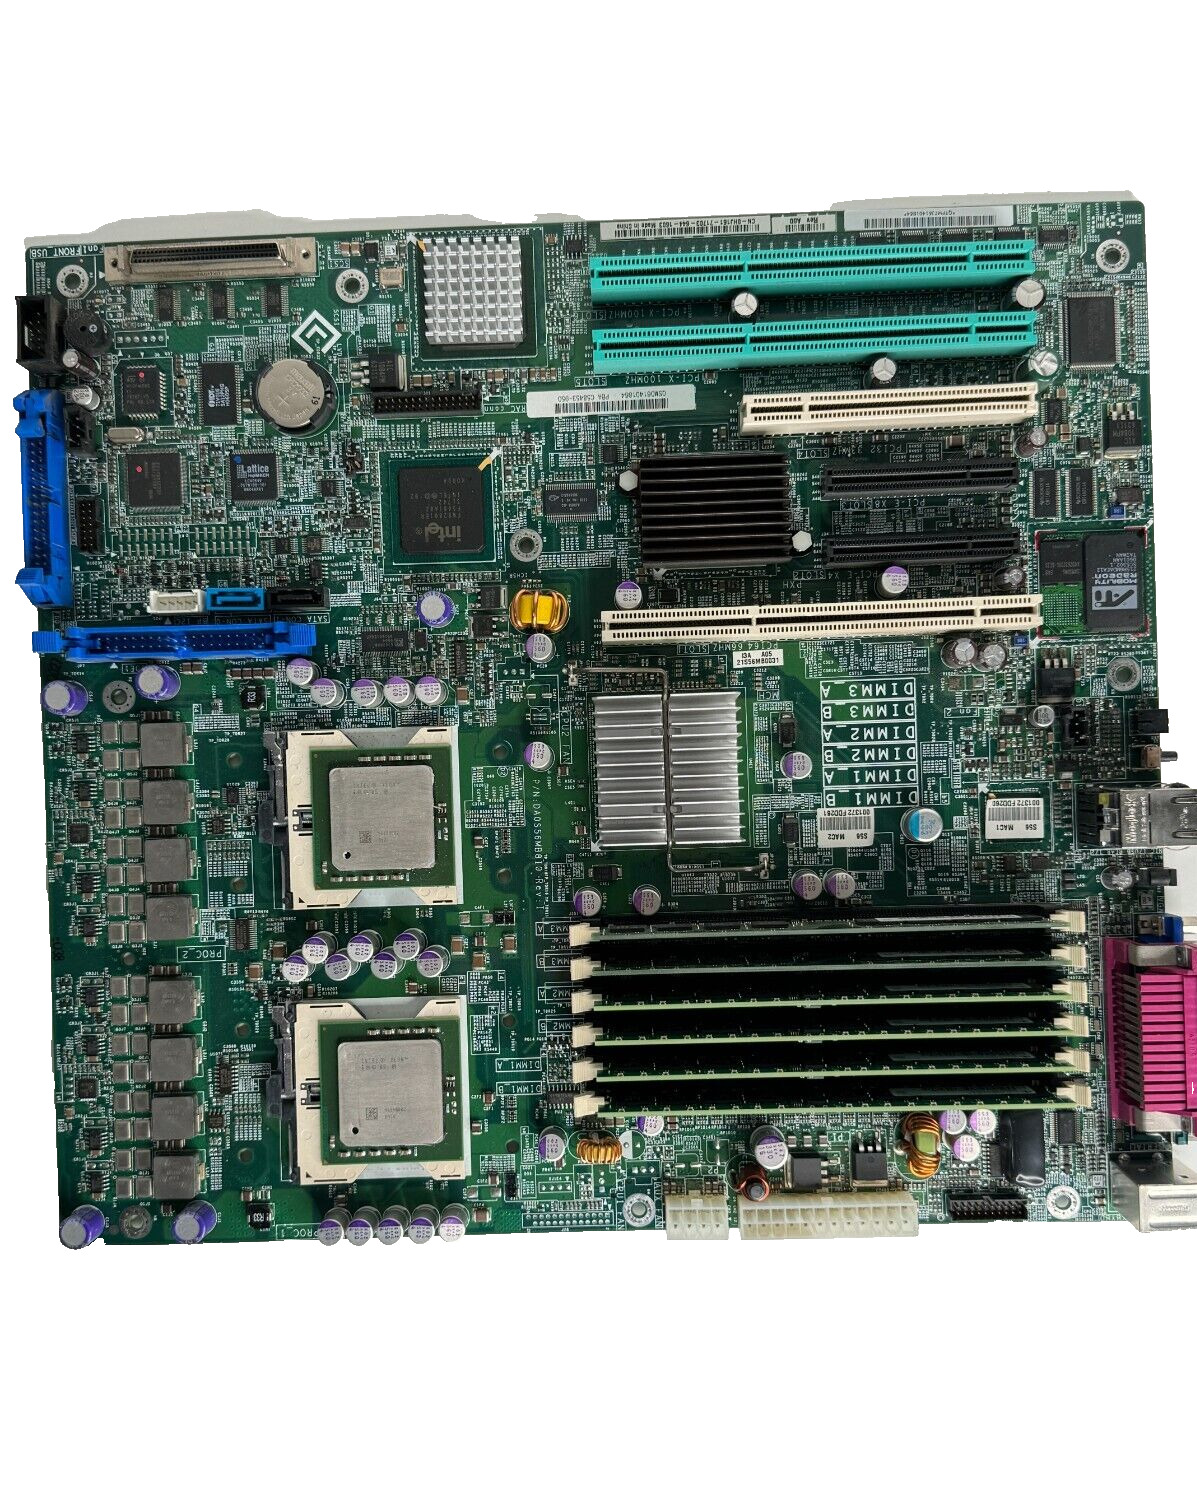 Dell PowerEdge 1800 Server DA0S56MB8I0 Motherboard OHJ161 Dual Intel Xeon 3GB